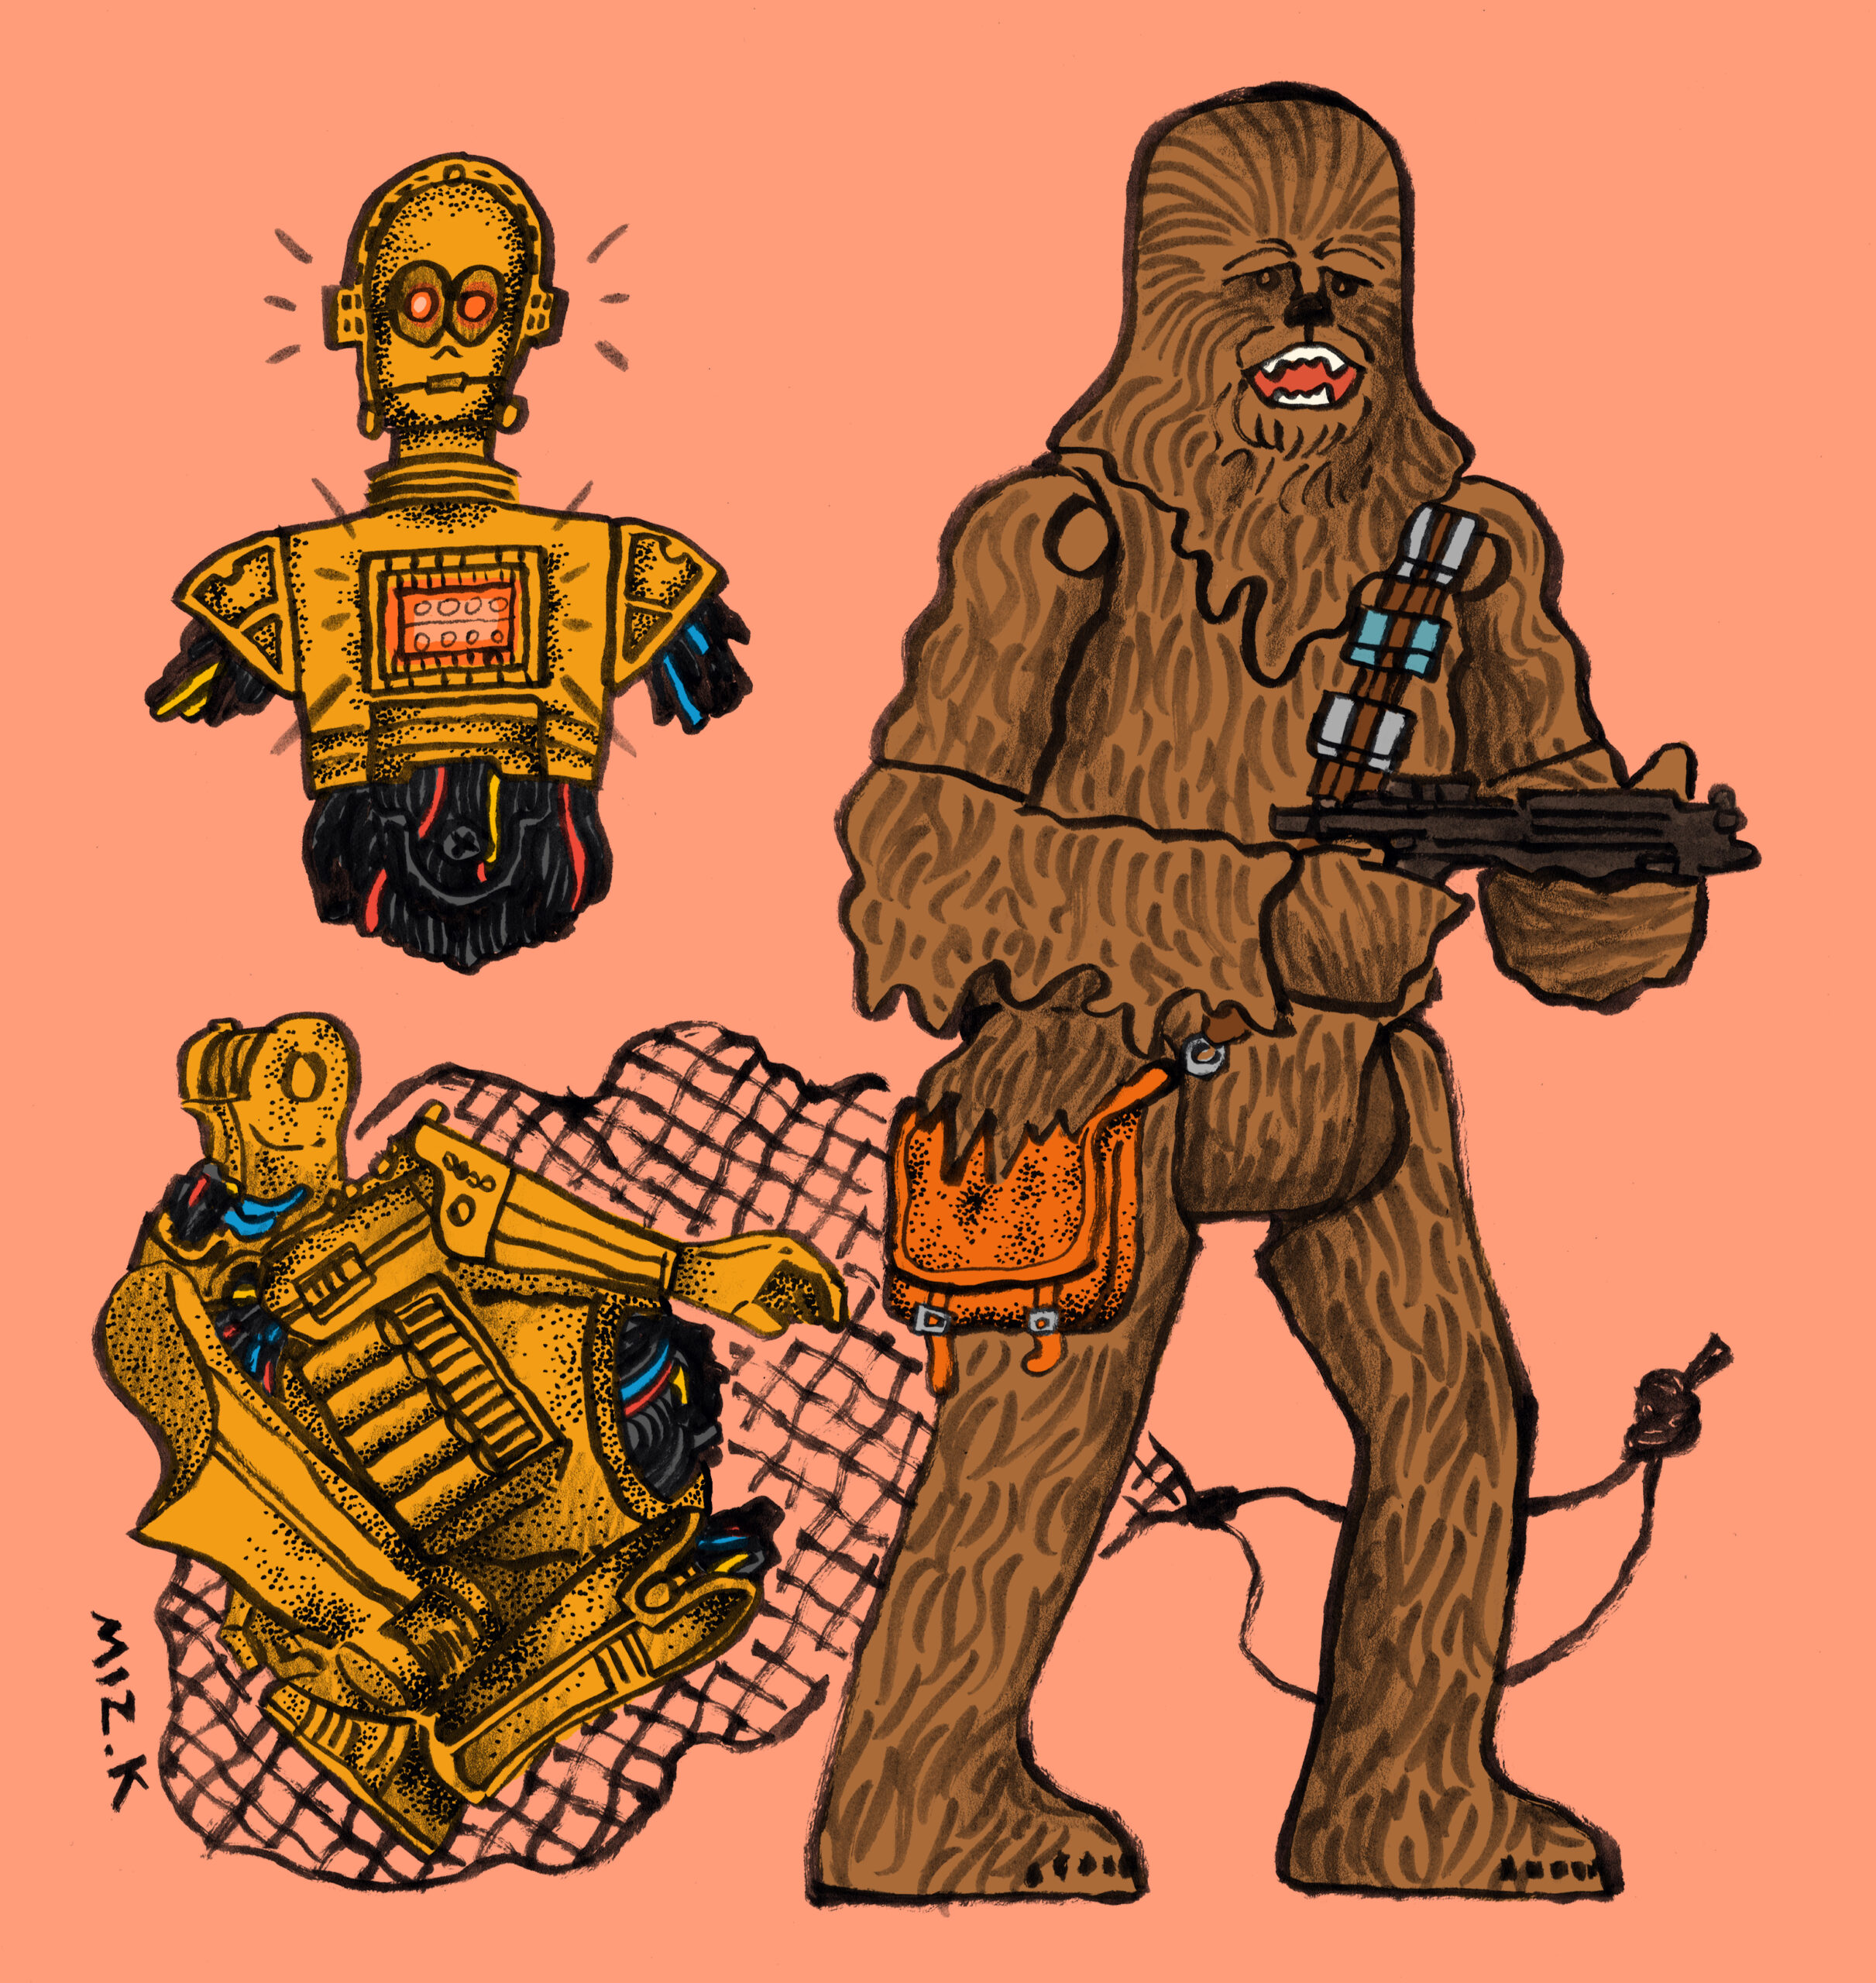 Chewbacca and C-3PO